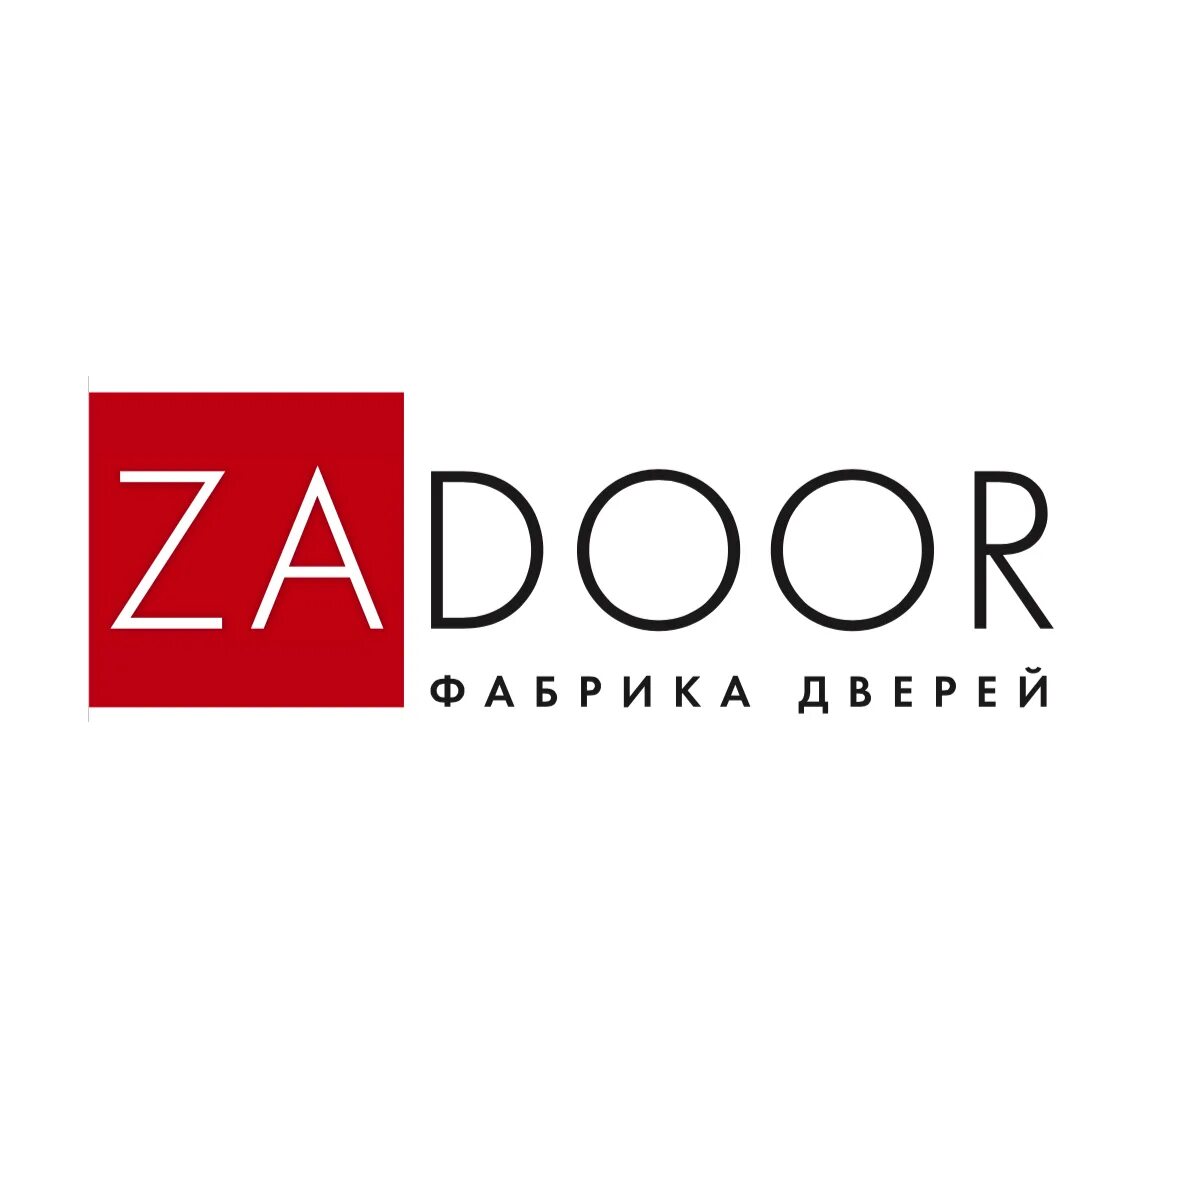 Фабрика Zadoor логотип. Zadoor двери. Двери Задор лого. Фабрика дверей Задор. Задор двери сайта